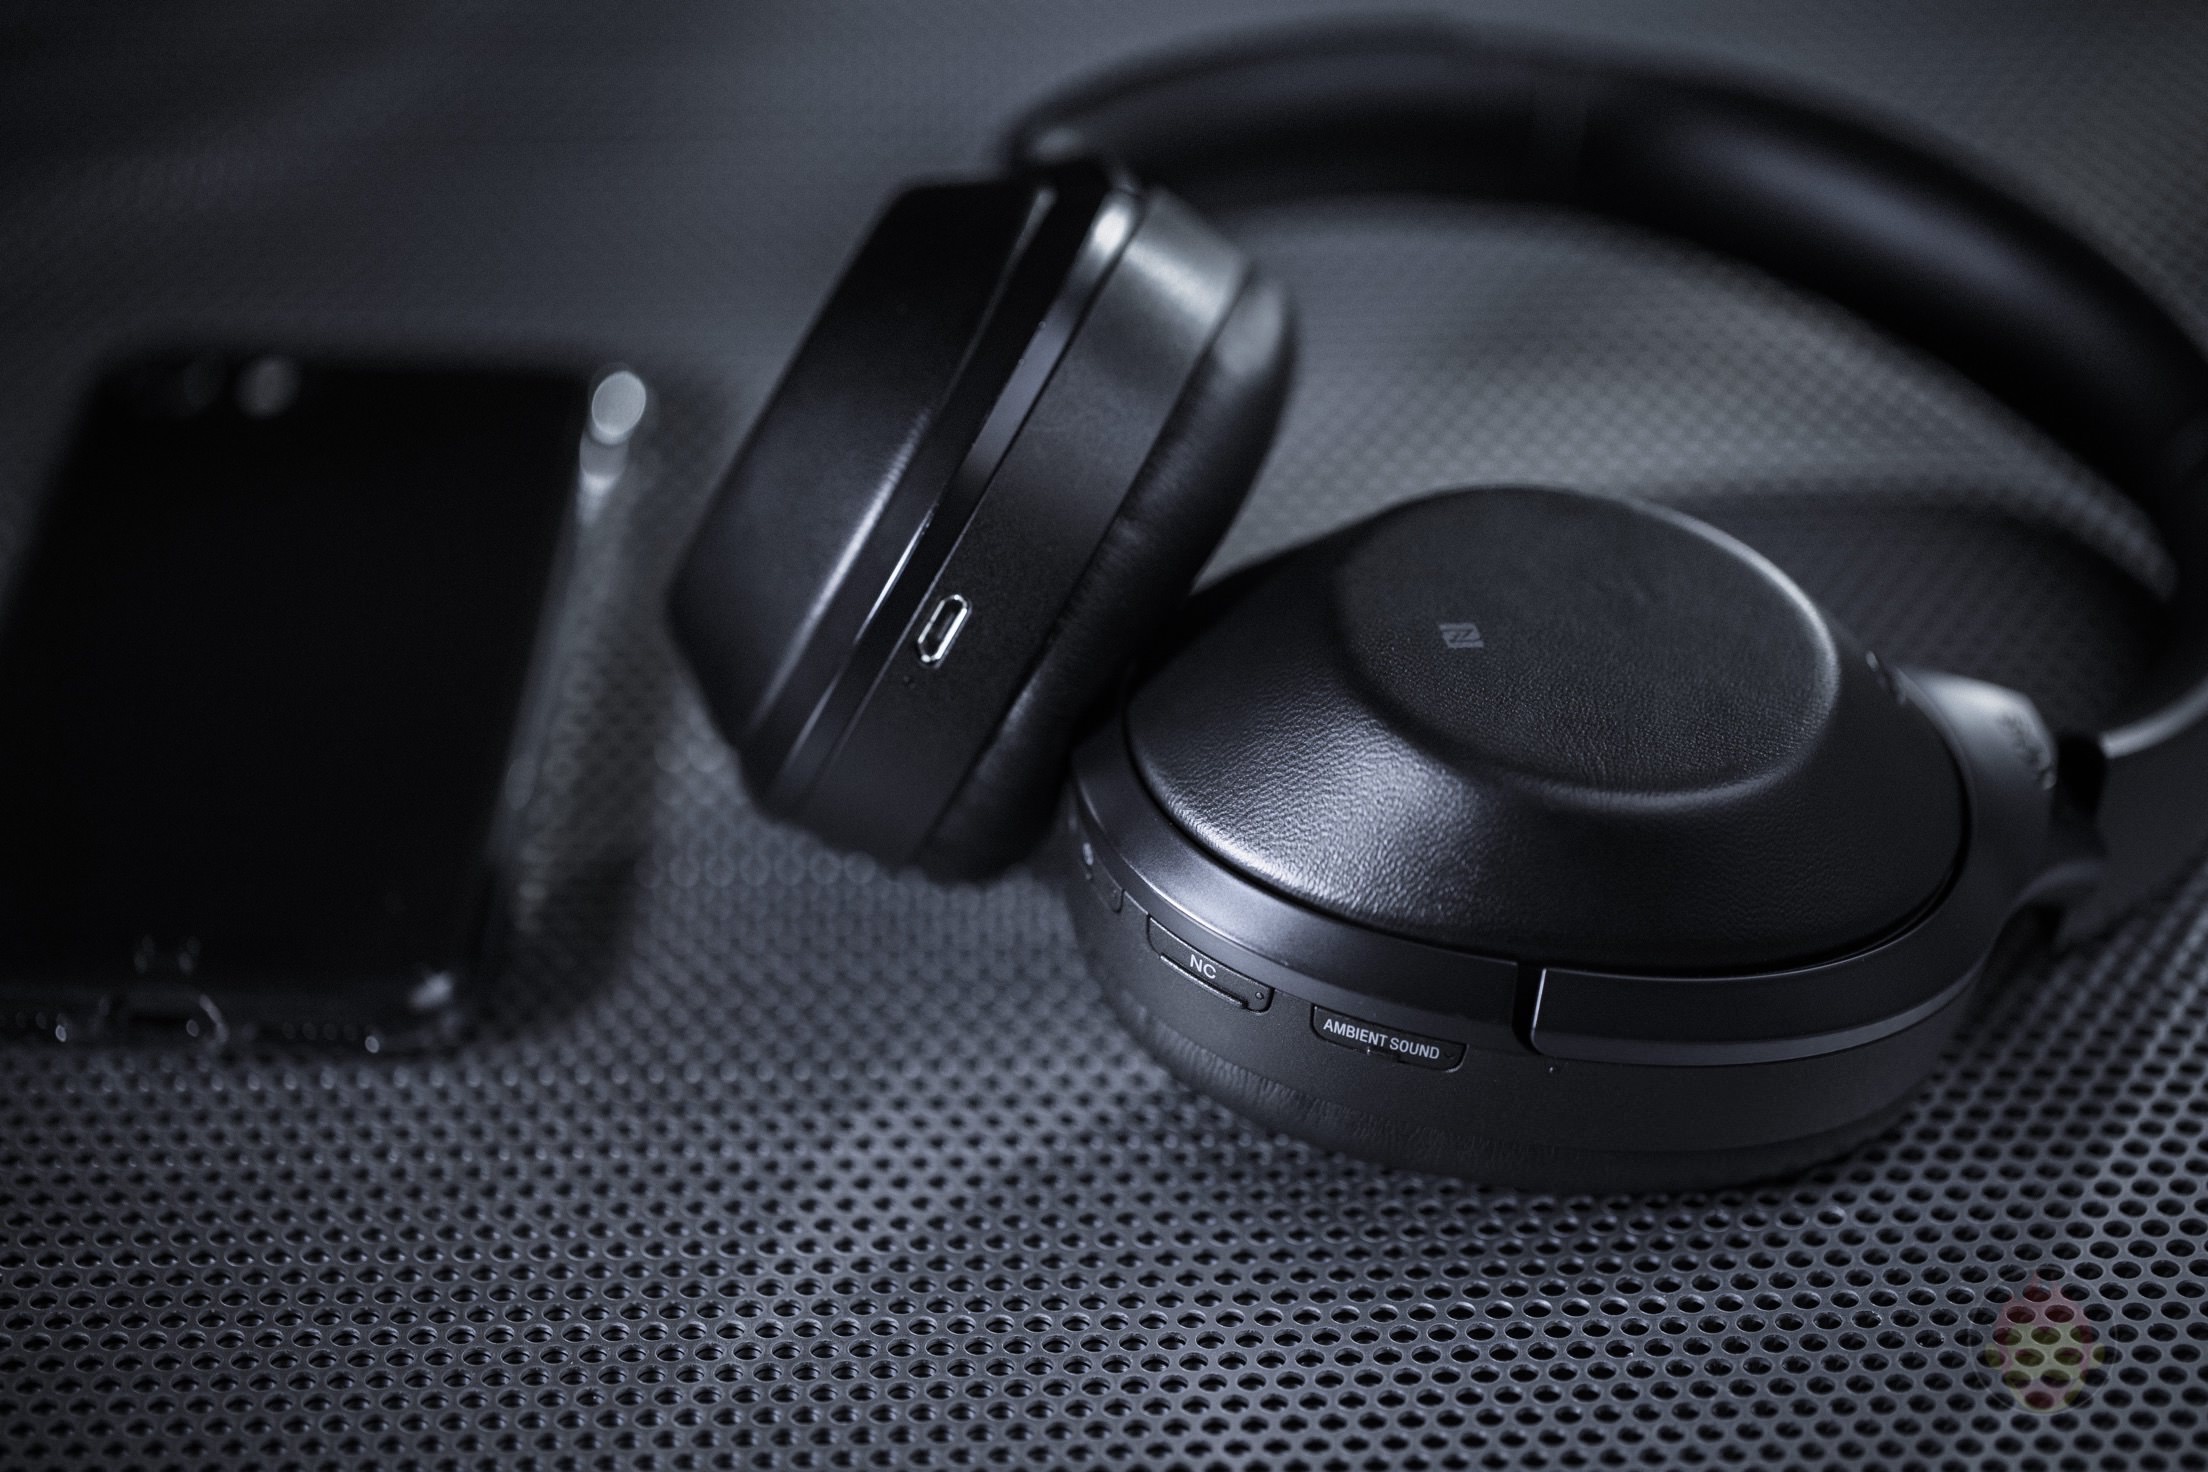 SONY-Wireless-Headphones-MDR-X1000-Review-10.jpg